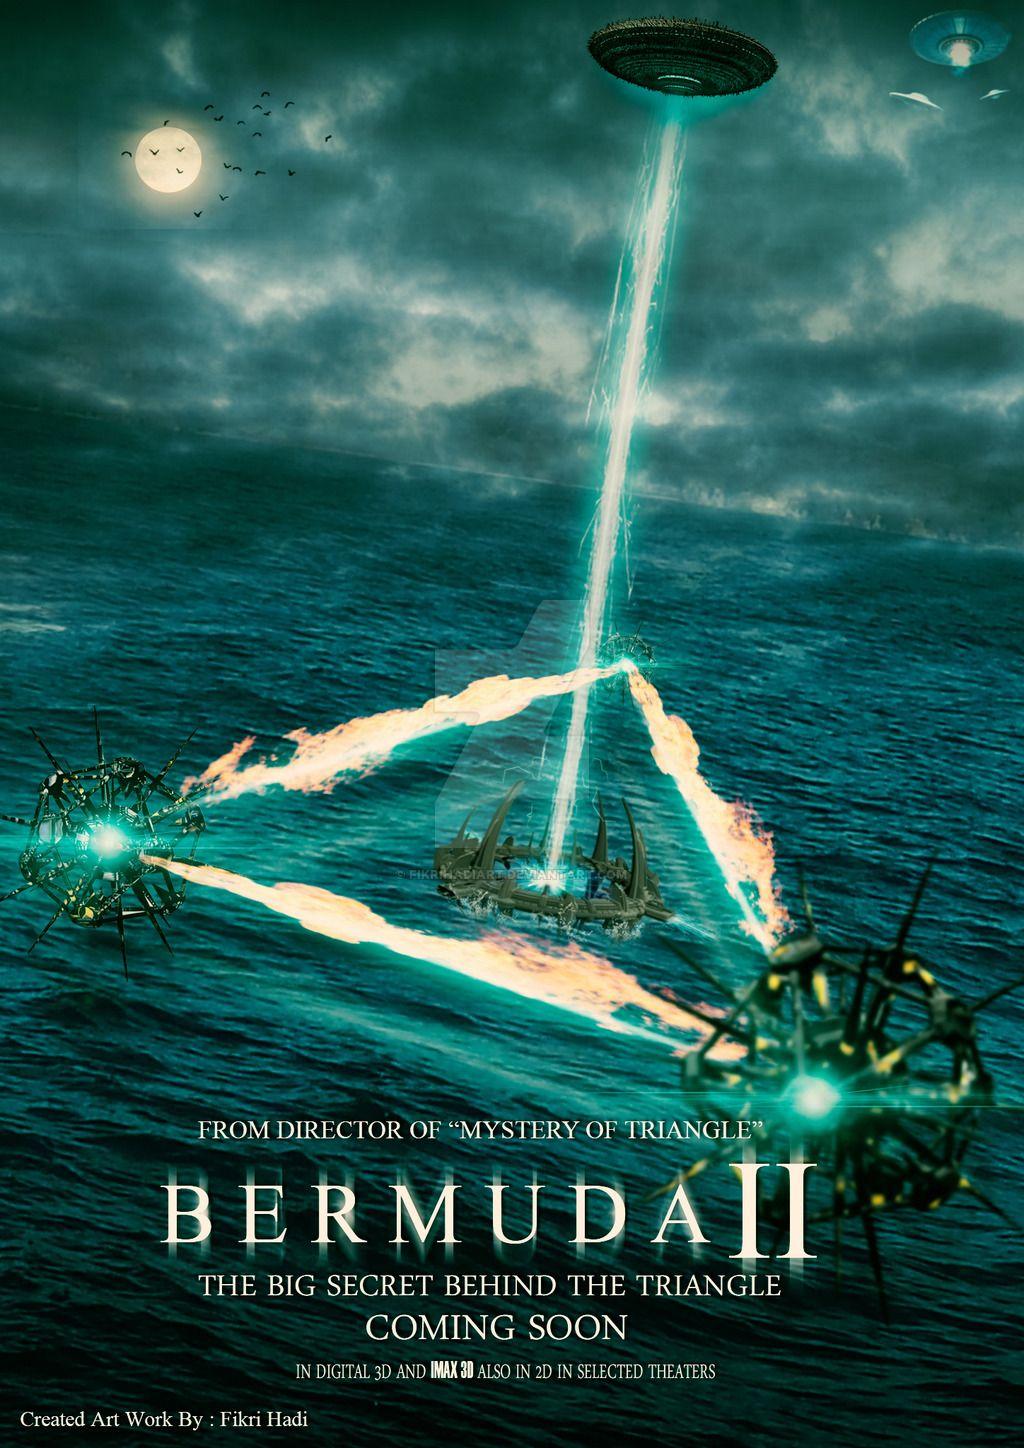 Bermuda Triangle II